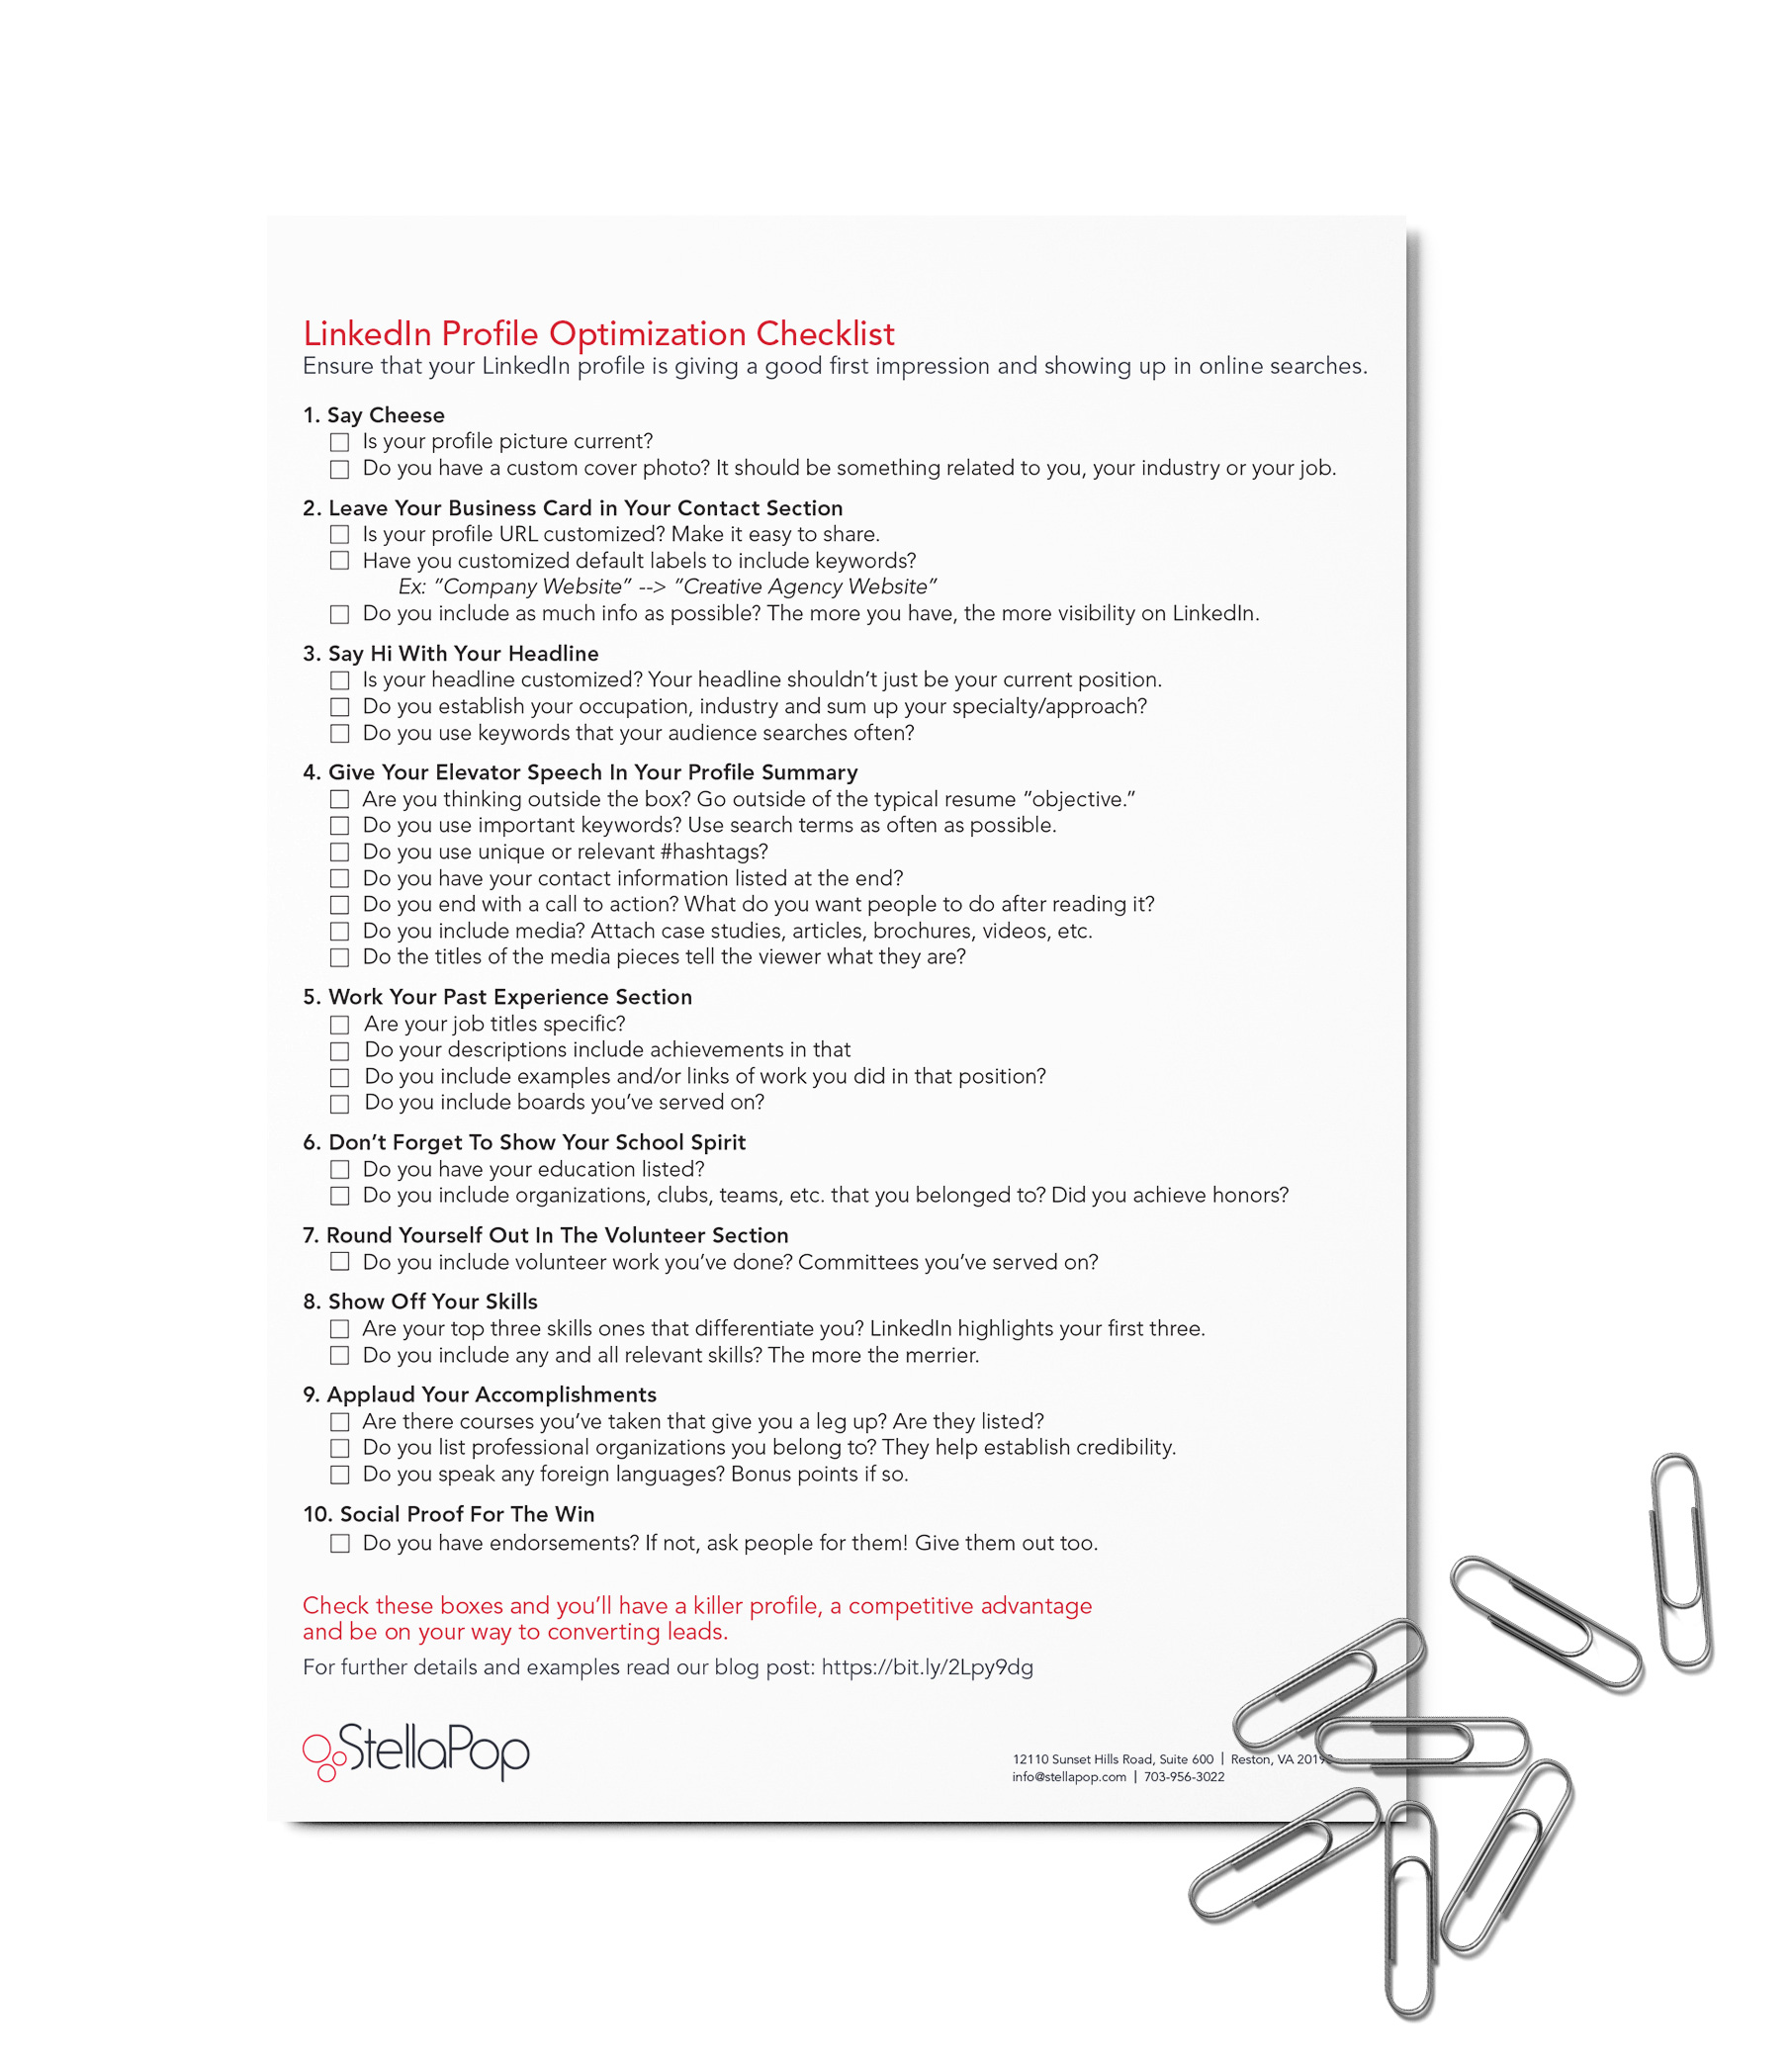 LinkedIn-Checklist